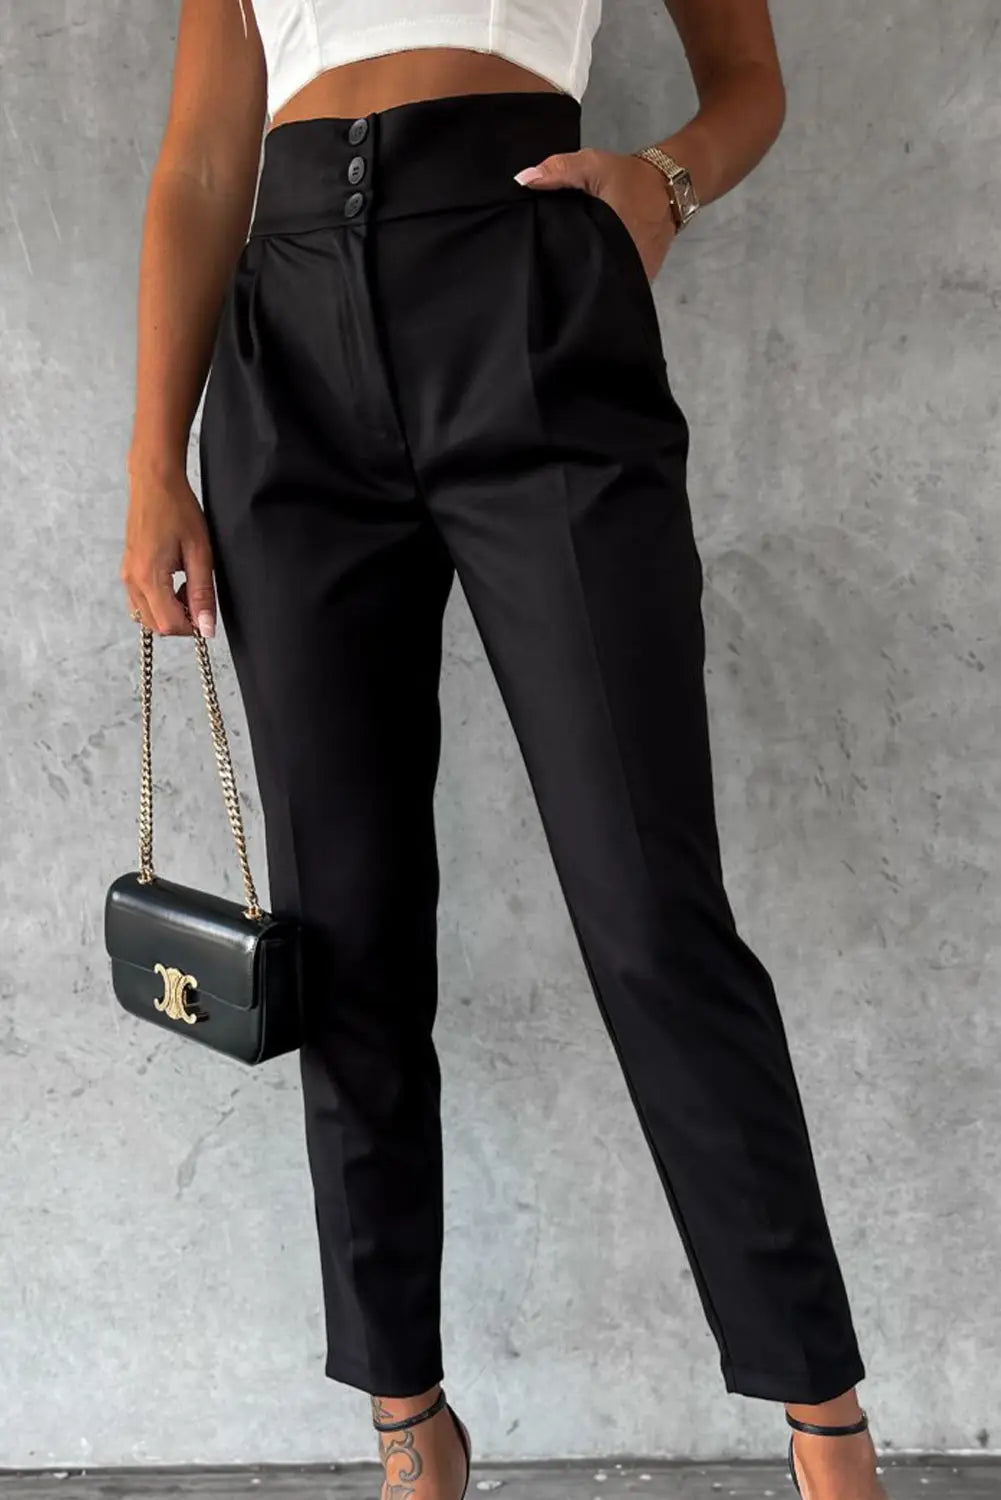 Black button high waist tapered pants - 6 / 90% polyester + 10% elastane - skinny